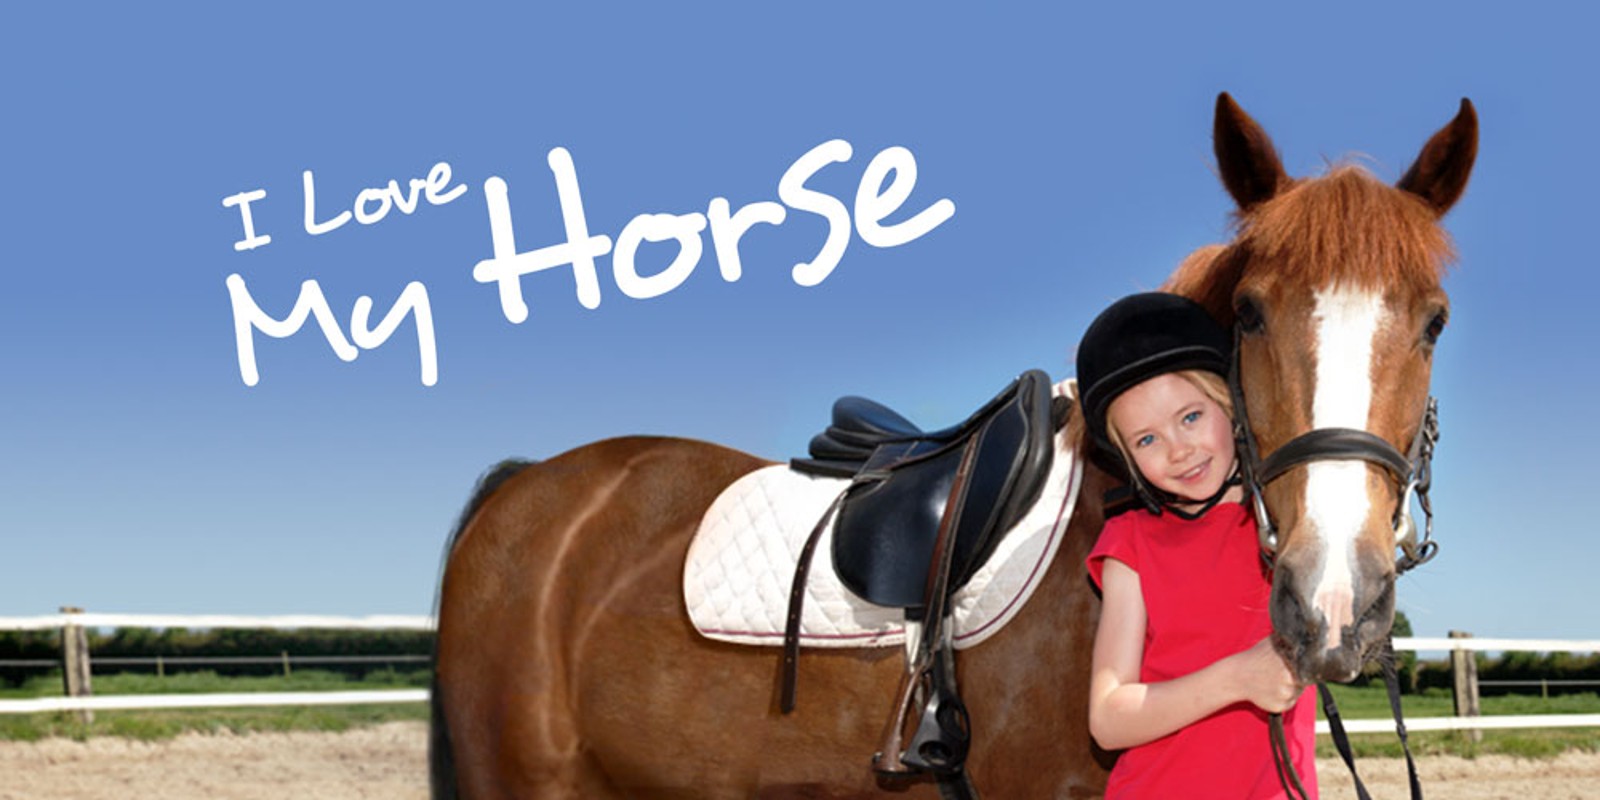 I Love My Horse | Nintendo 3DS | Games | Nintendo1600 x 800